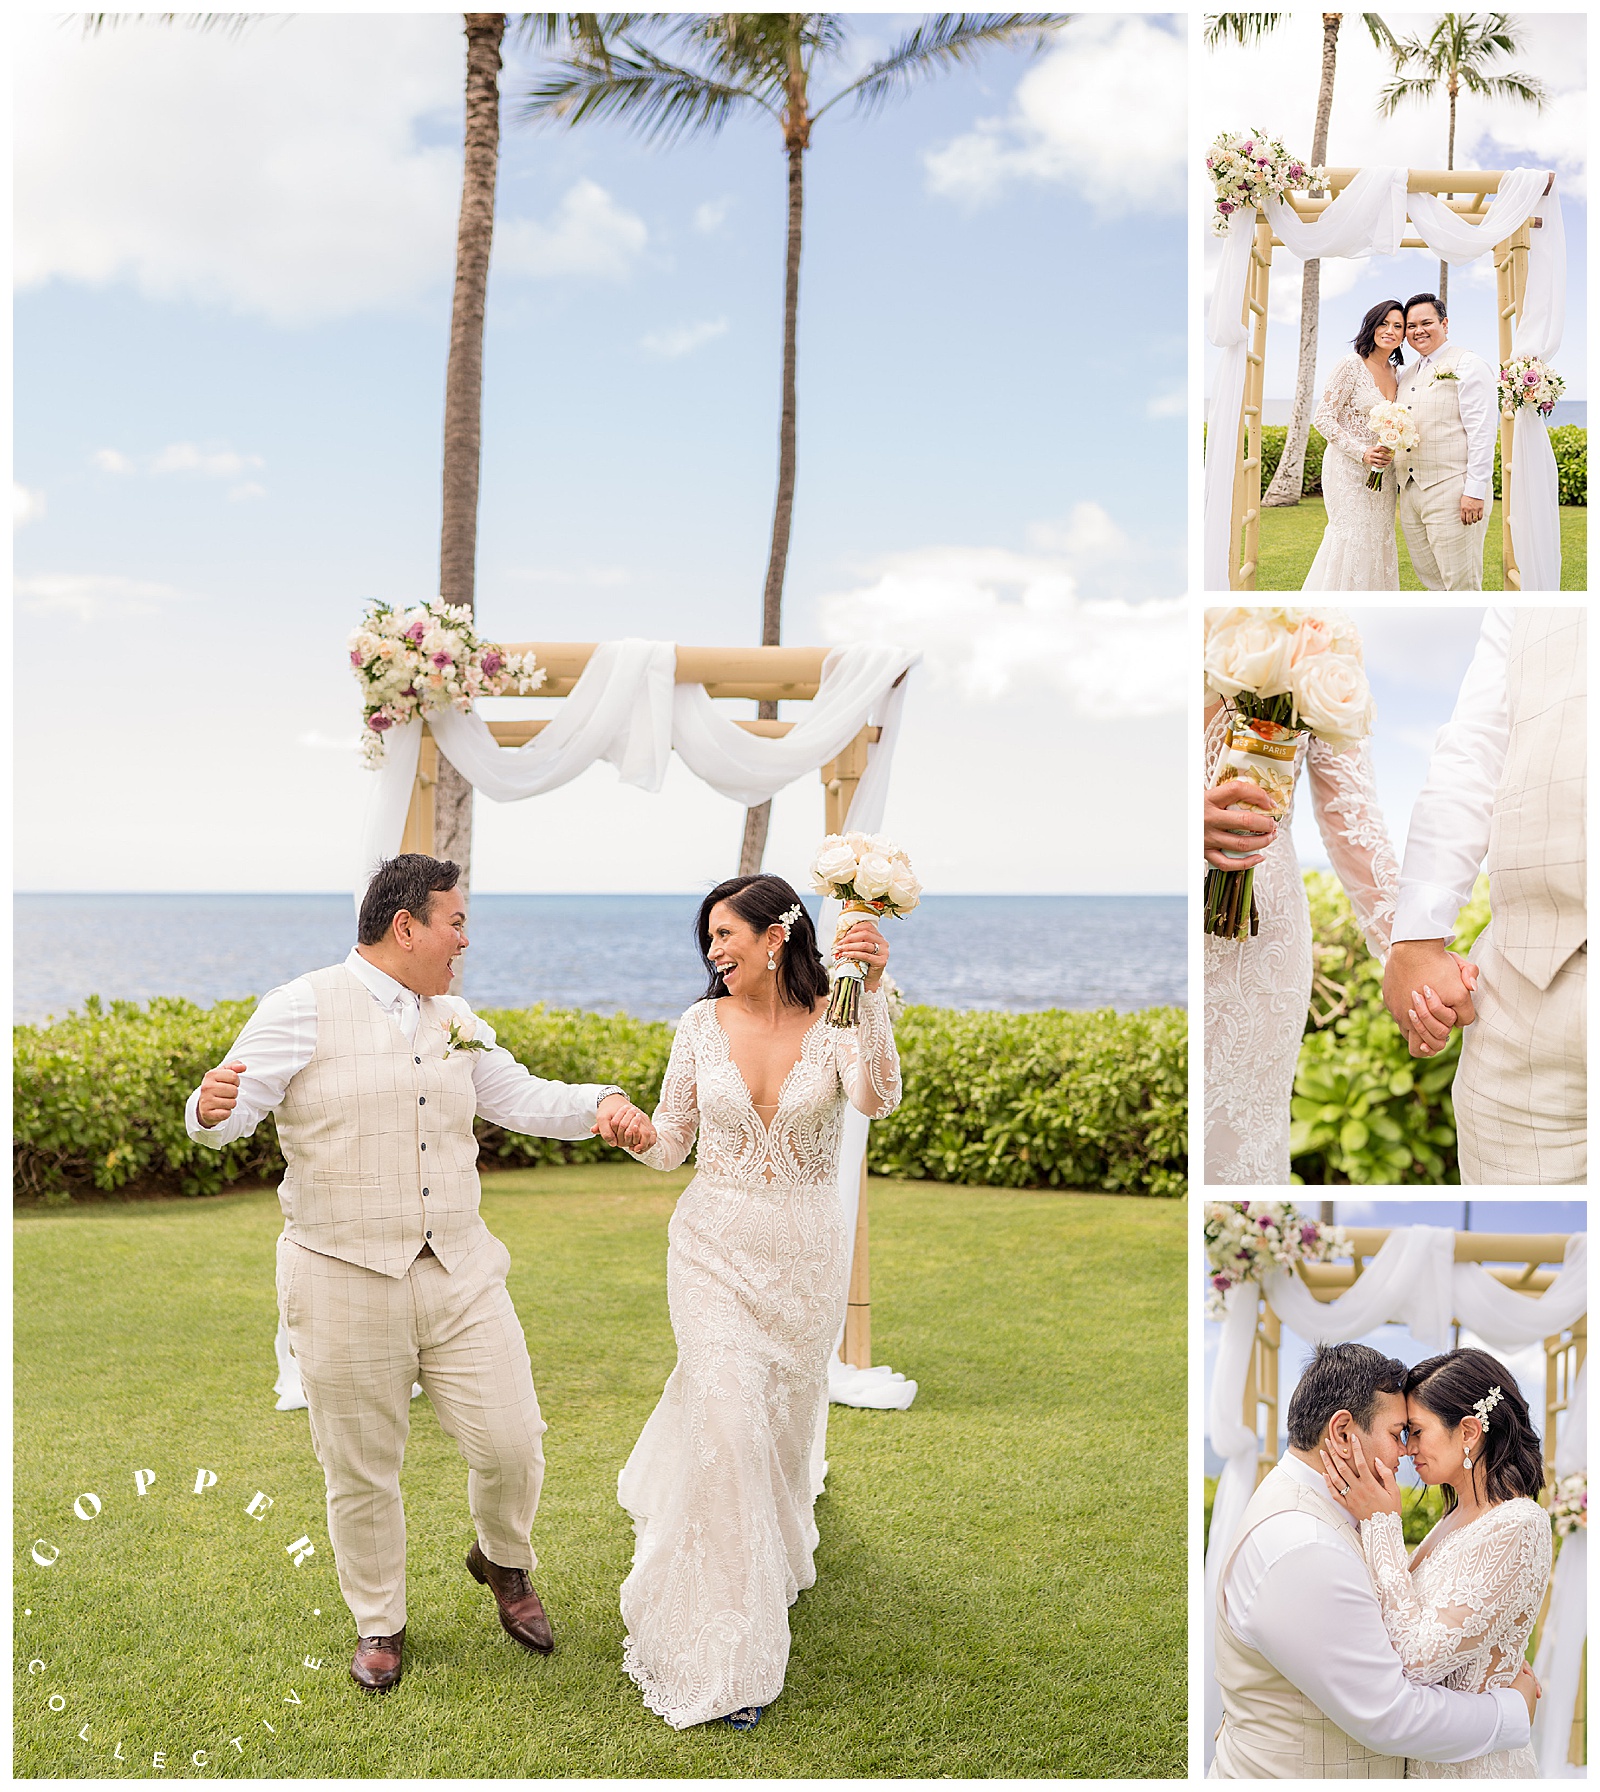 A Lesbian Wedding on the Beach in Oahu, Hawaii